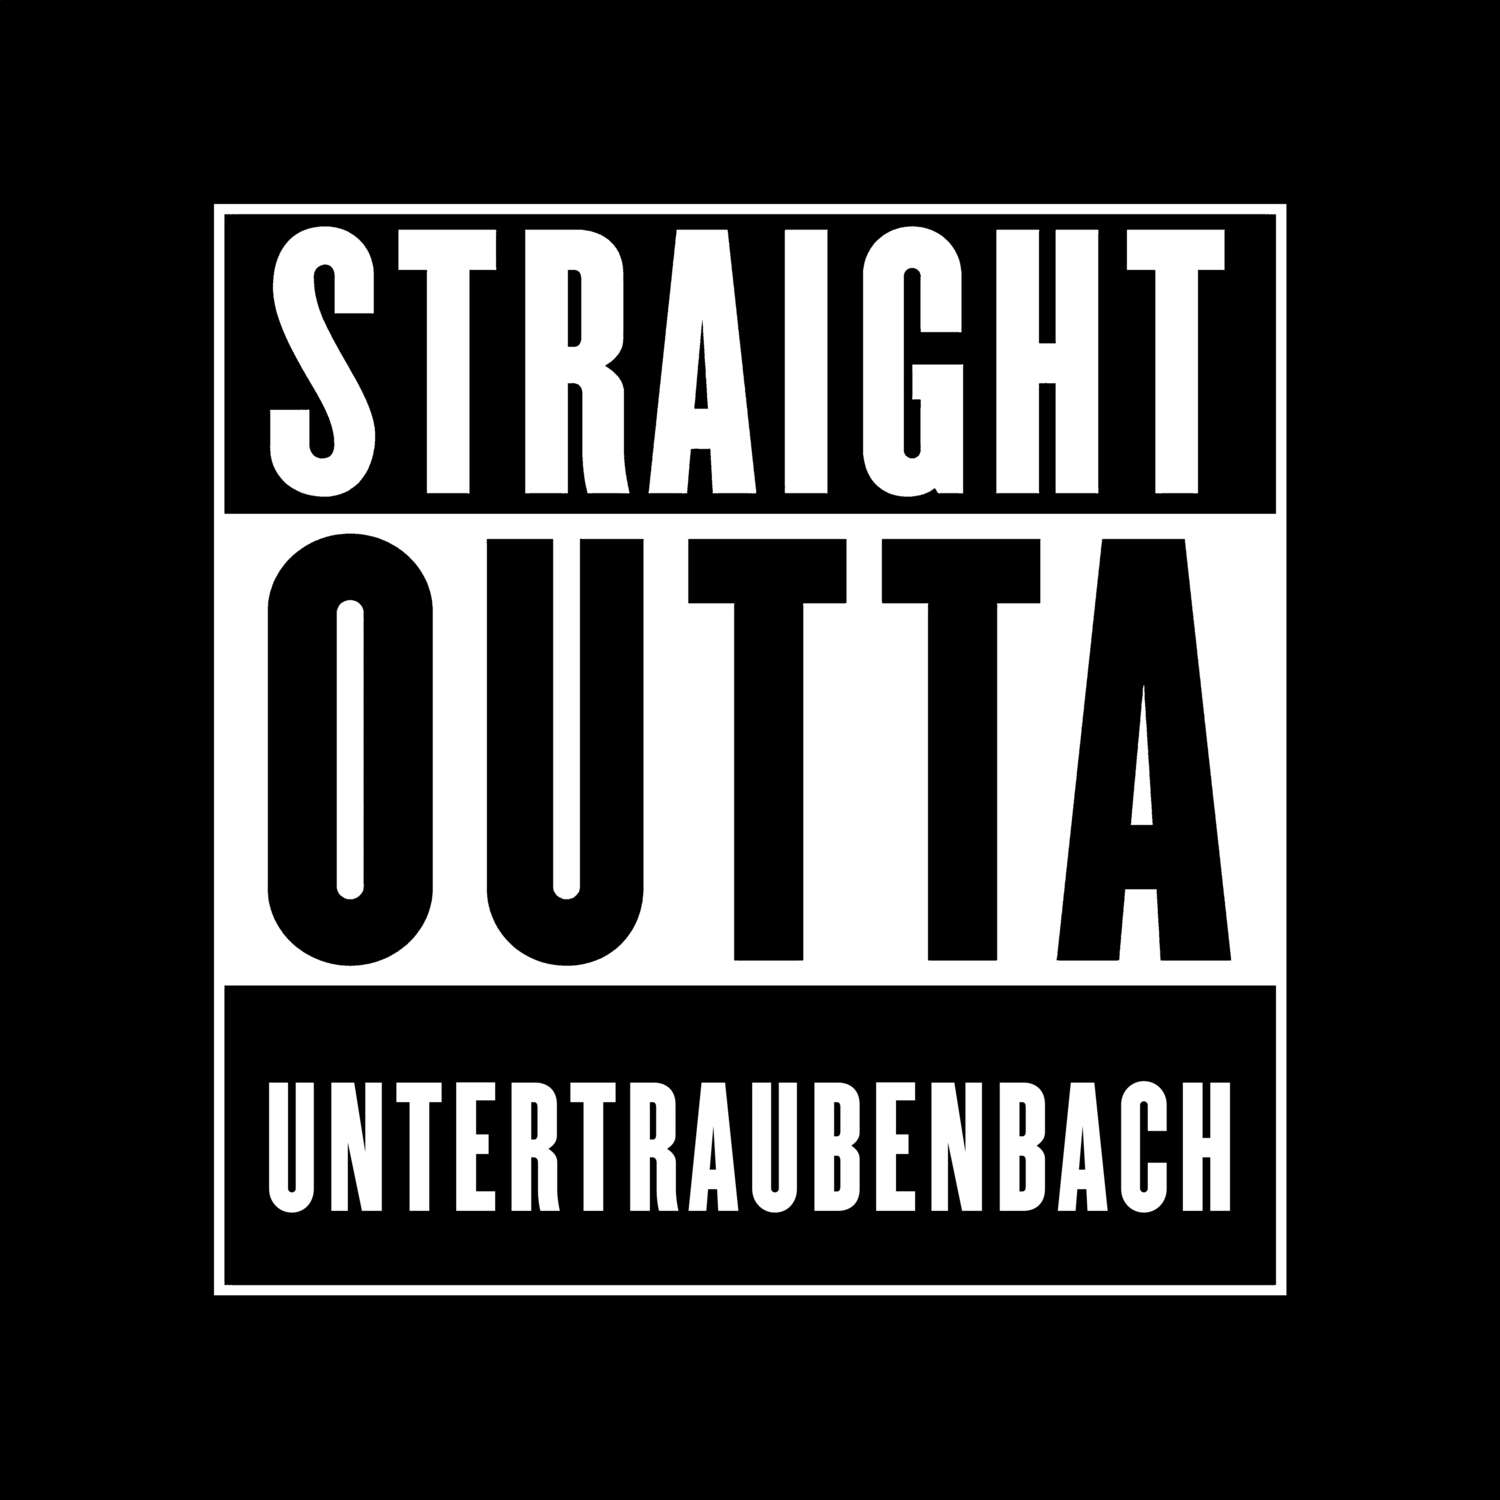 Untertraubenbach T-Shirt »Straight Outta«